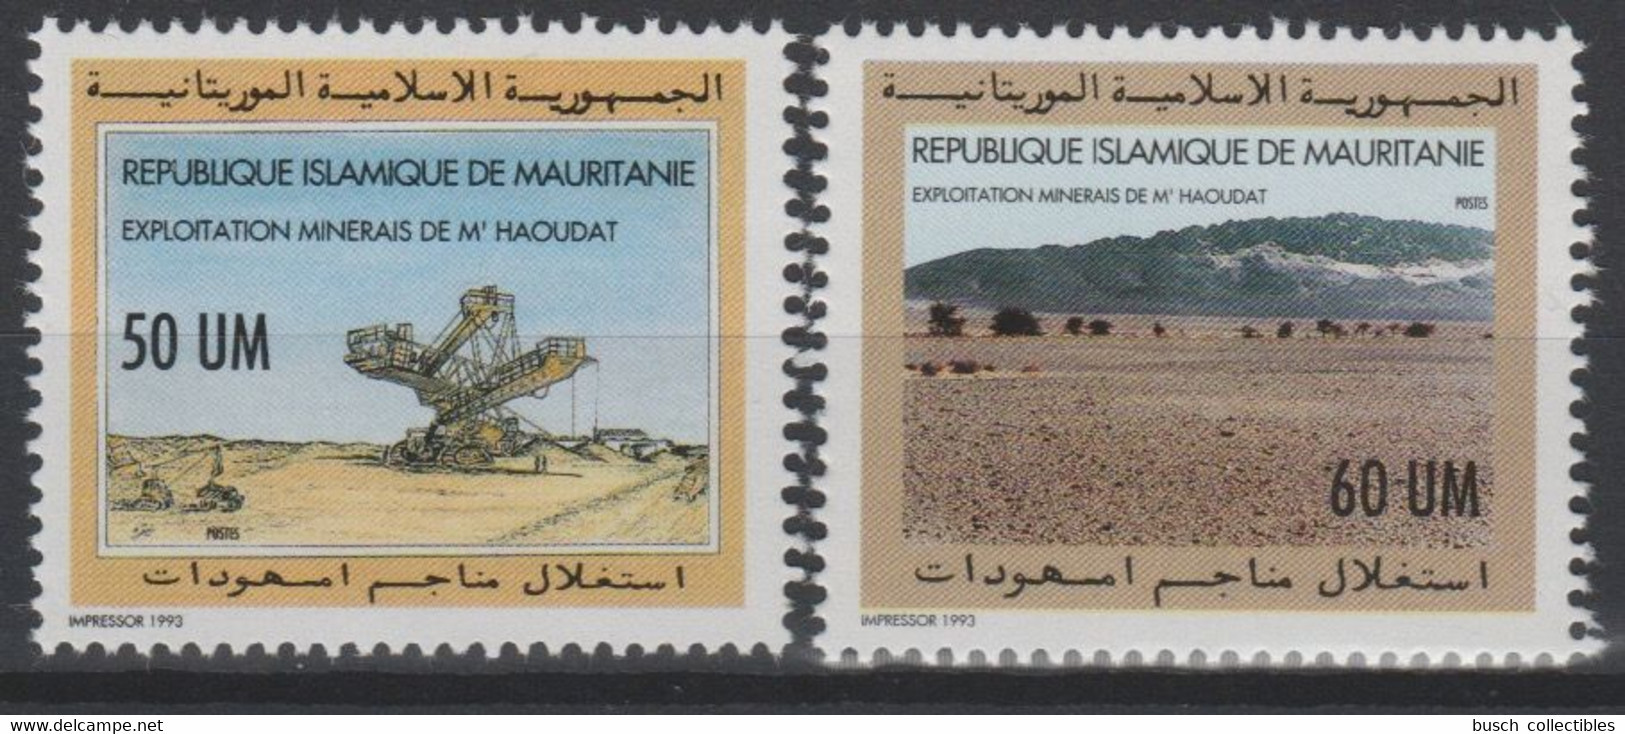 Mauritanie Mauretanien Mauritania 1993 Mi. 1010 - 1011 Exploitation Minerais M'Haoudat 2 Val. ** - Mauritanie (1960-...)